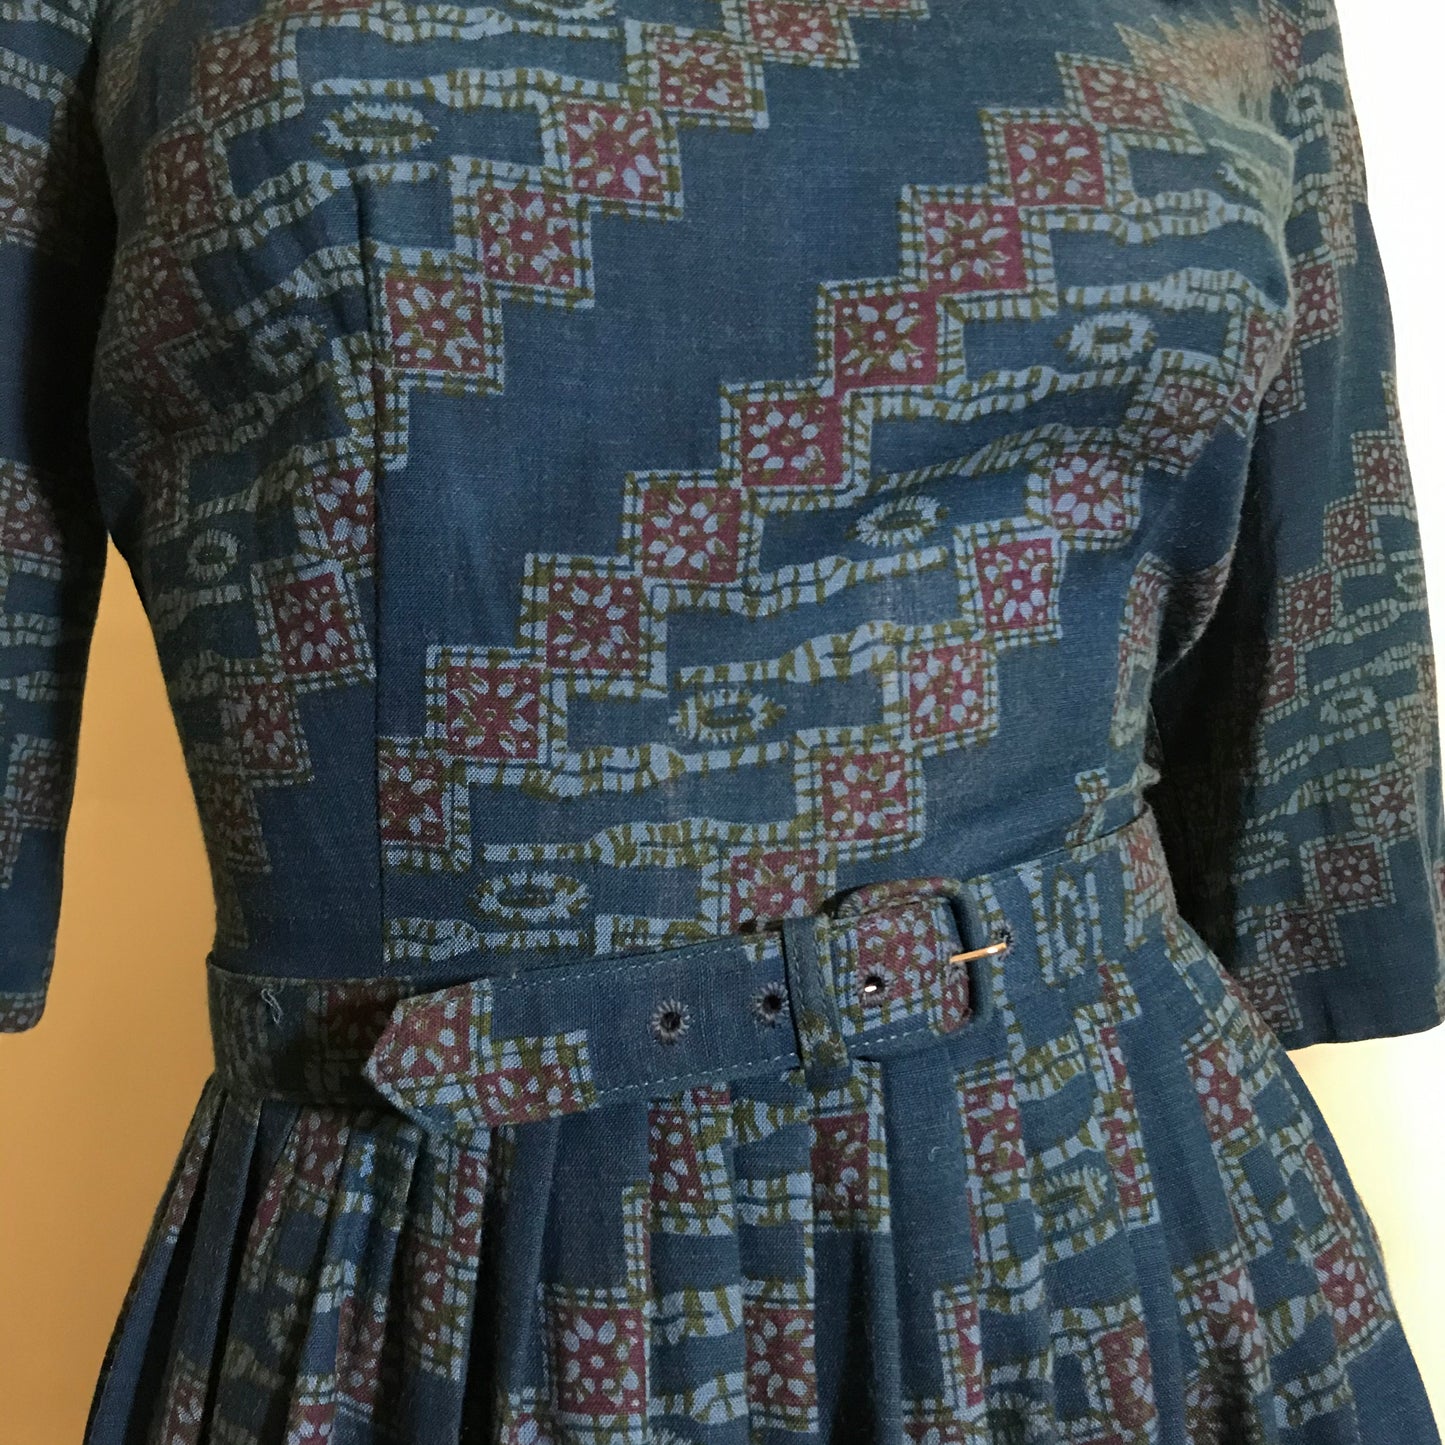 Black and Blue Rhinestone Trimmed Dress  circa 1950s